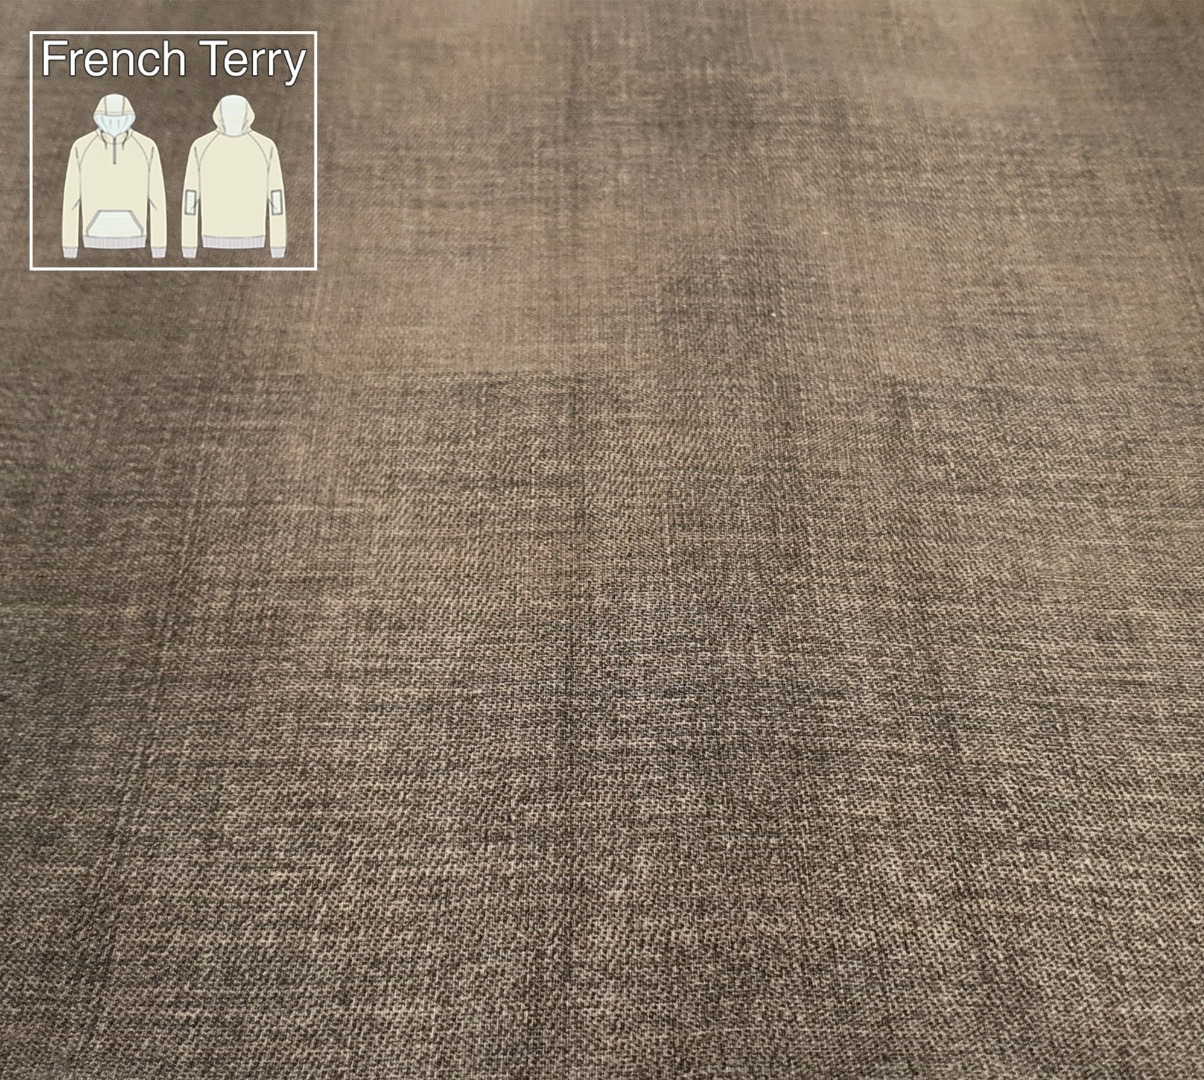 05m Sweat French Terry Gots Digitaldruck Jeansoptik schwarz grau